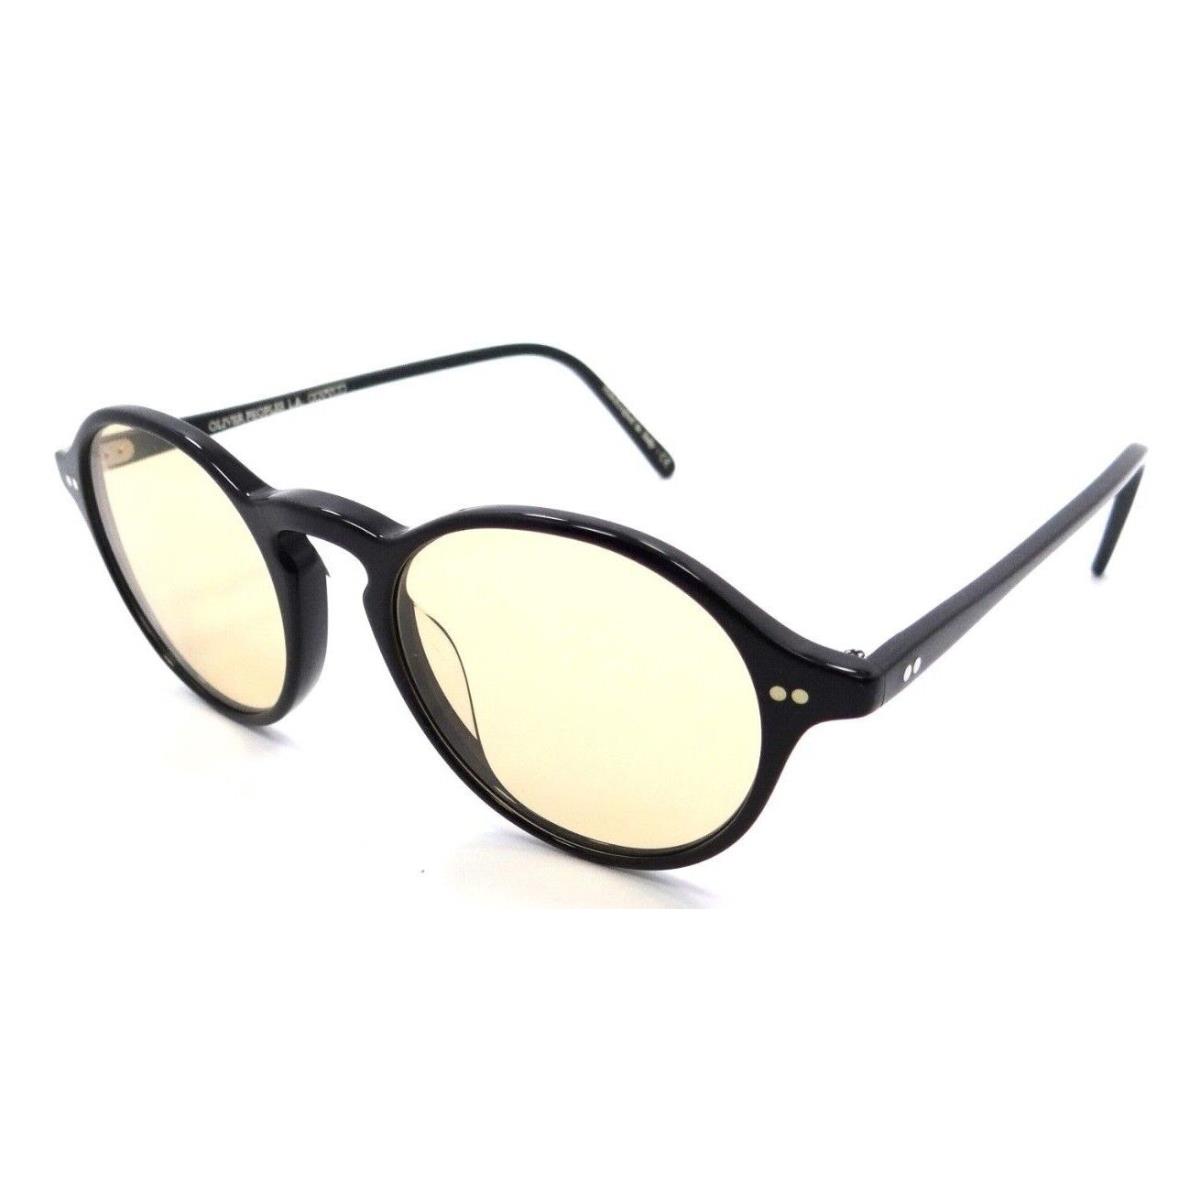 Oliver Peoples Sunglasses 5445U 1005 48-19-145 Maxson Black / Dusk Beach Italy